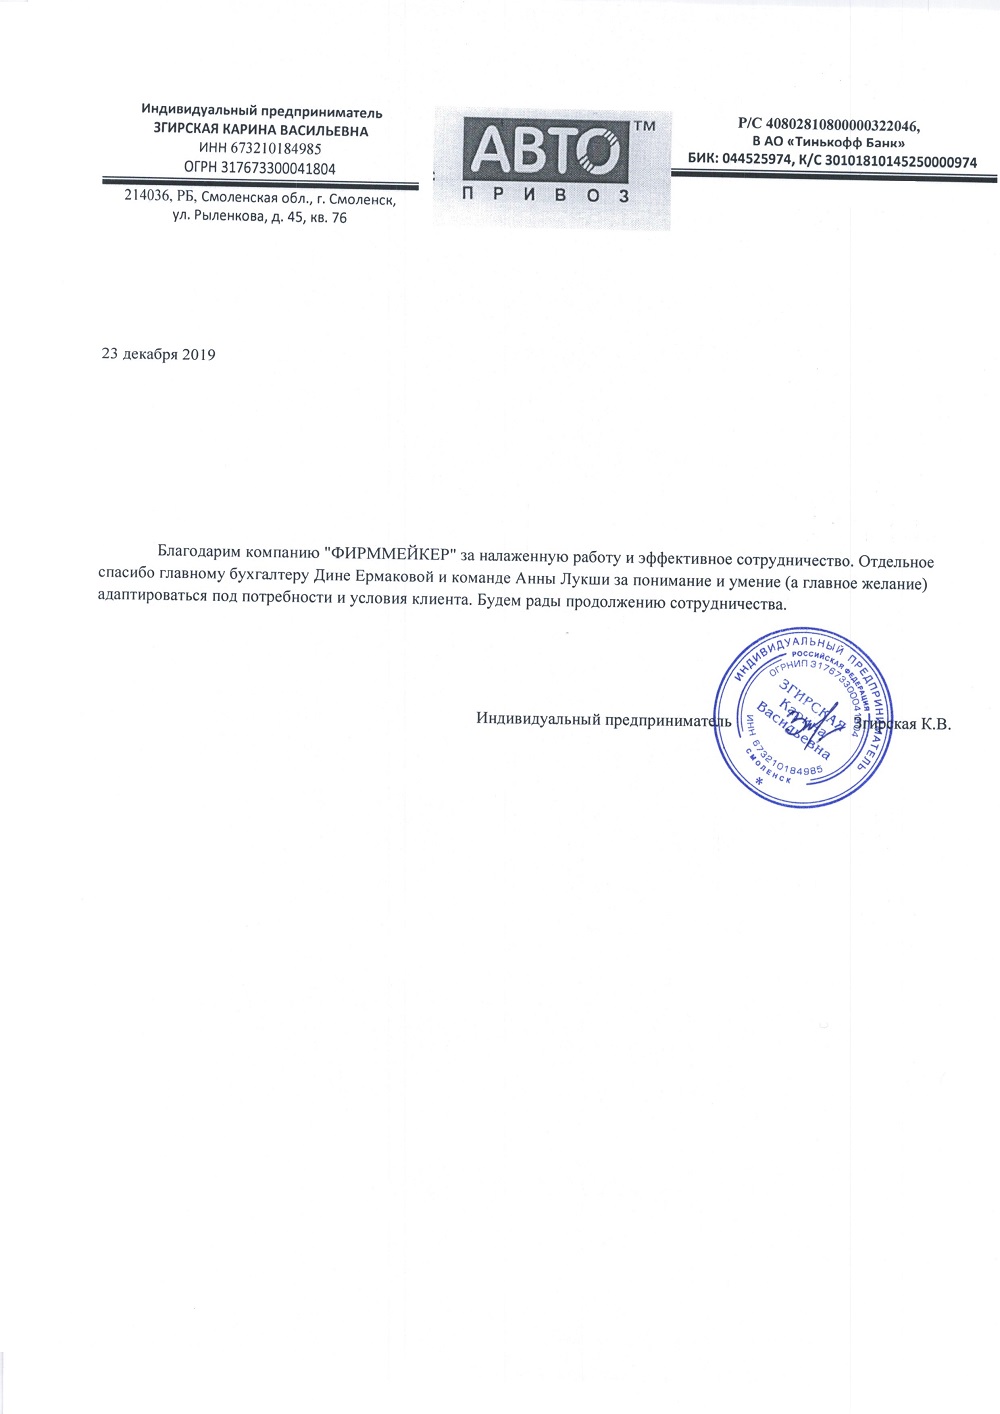 avtoprivoz отзыв о работе компании firmmaker